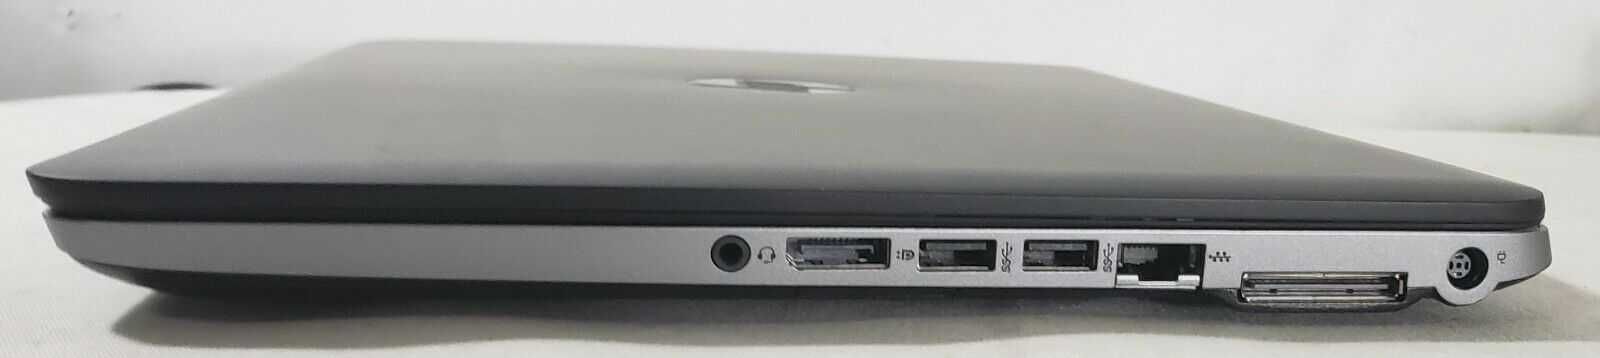 Лаптоп HP 850 G2 I7-5500U 16GB 512GB SSD 15.6 FHD Windows 10